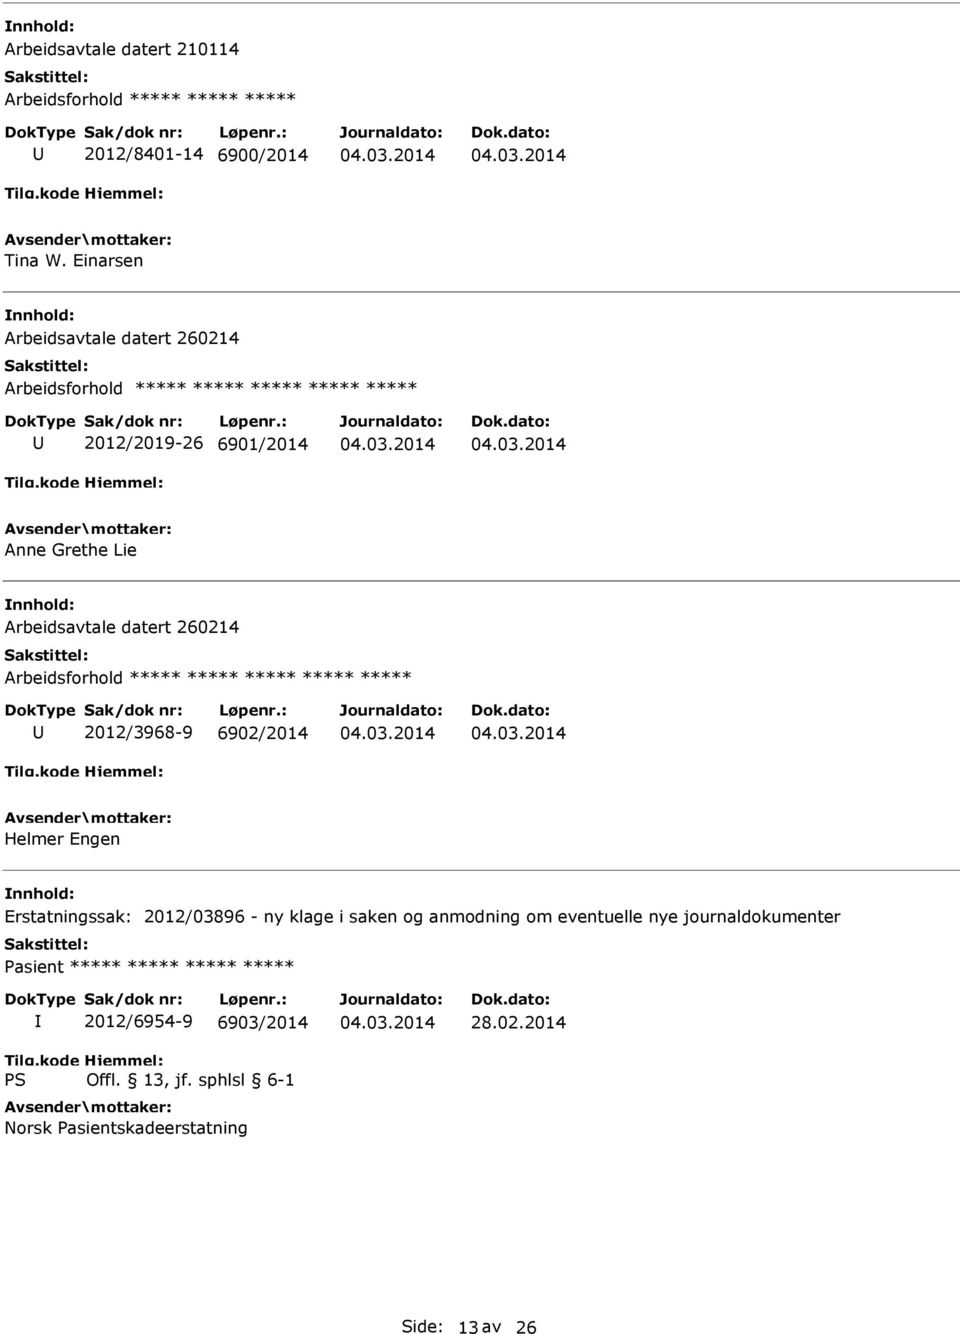 2012/3968-9 6902/2014 Helmer Engen Erstatningssak: 2012/03896 - ny klage i saken og anmodning om eventuelle